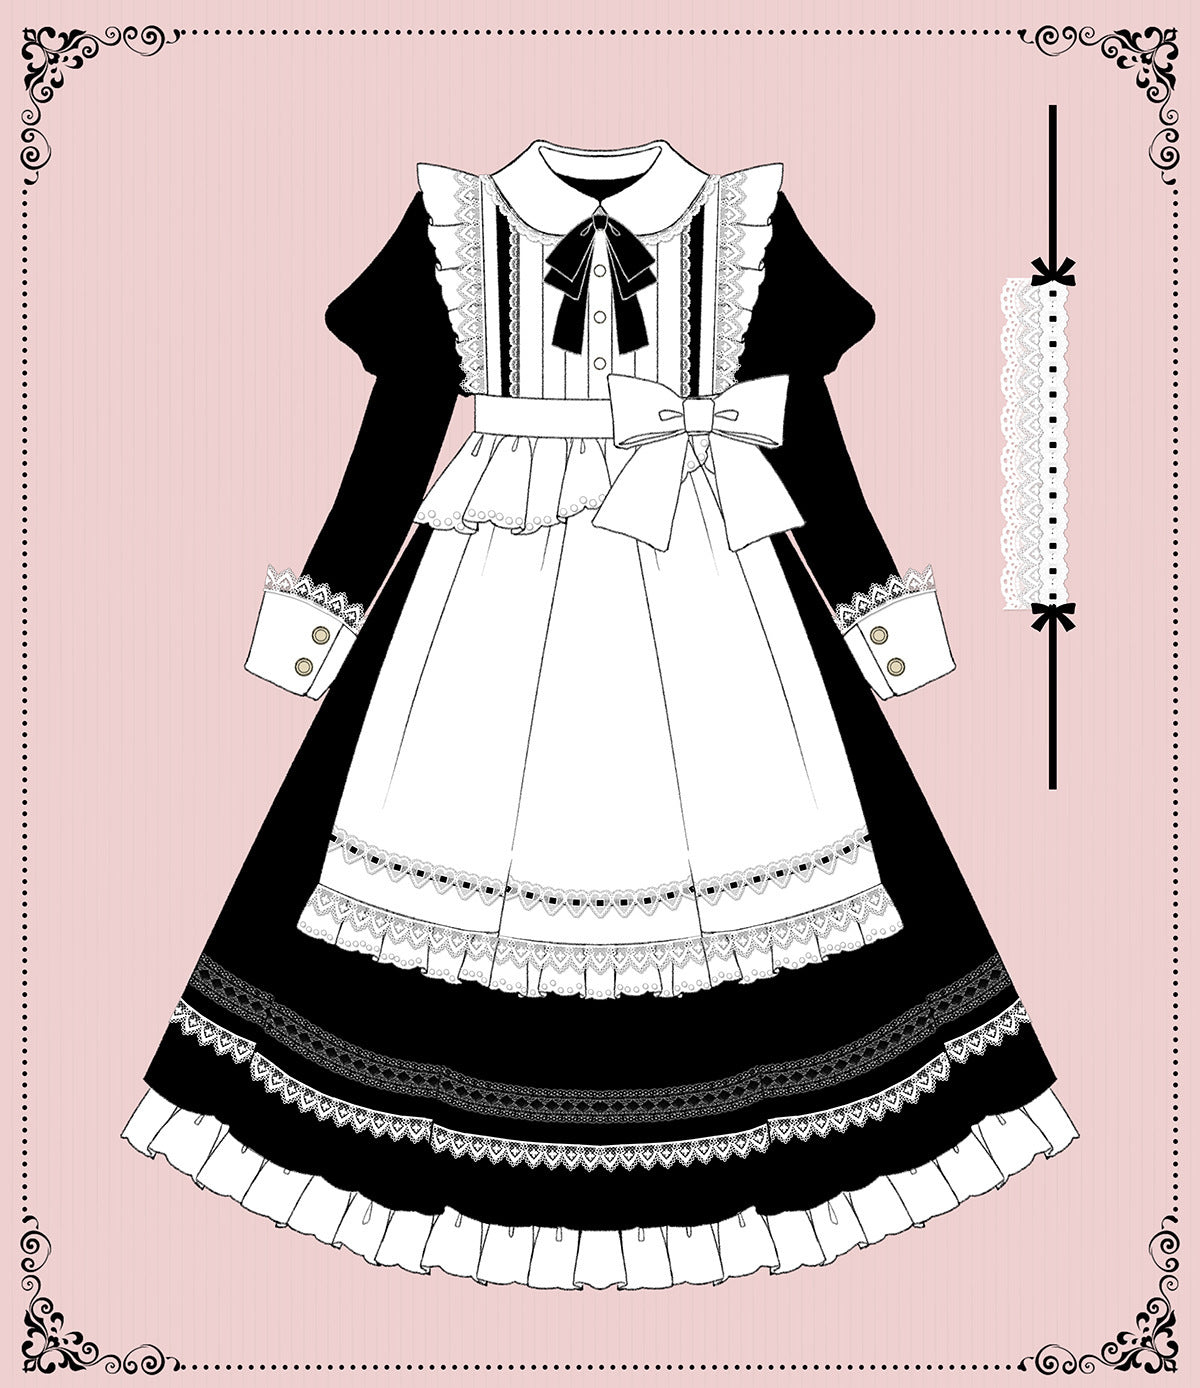 Classical Lolita dress with maid apron